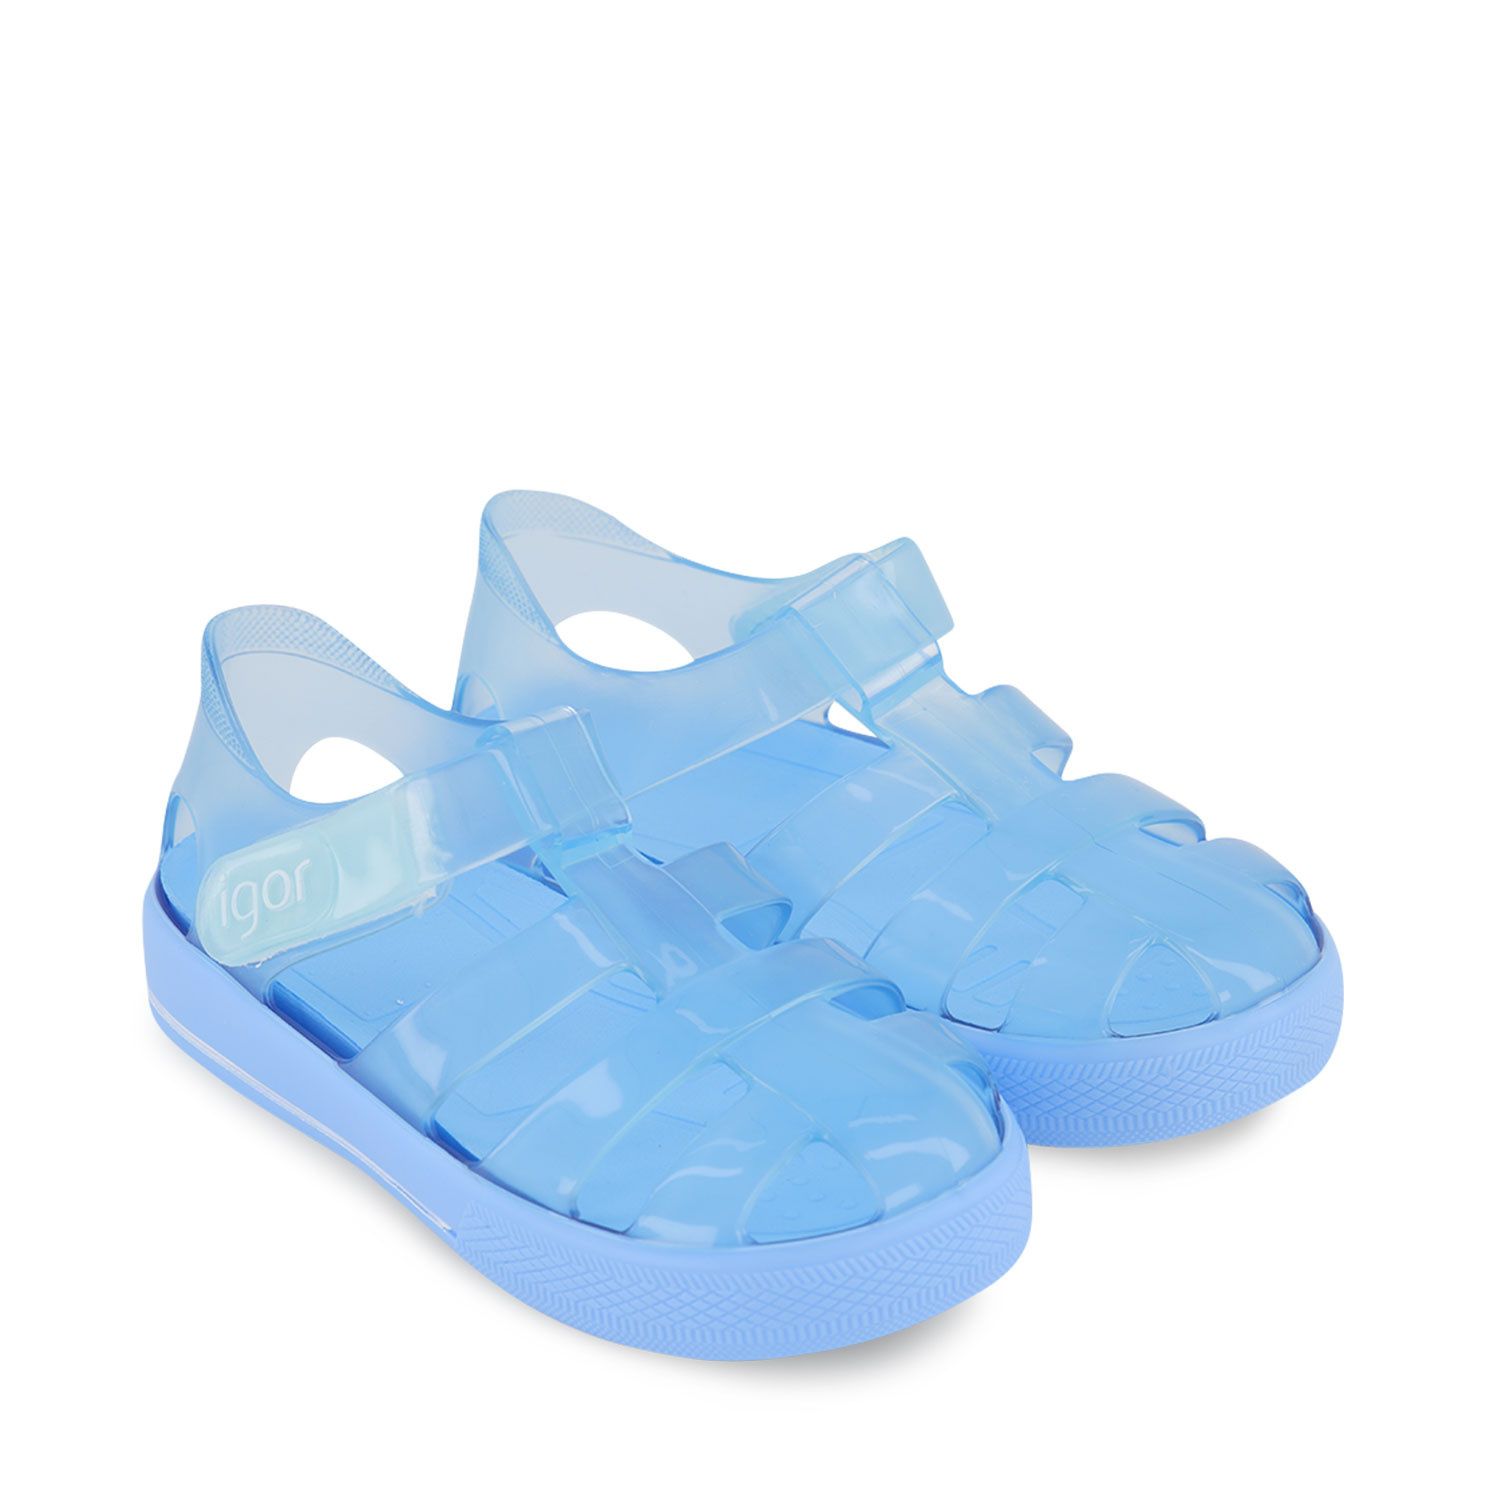 Picture of Igor S10245 kids sandals light blue